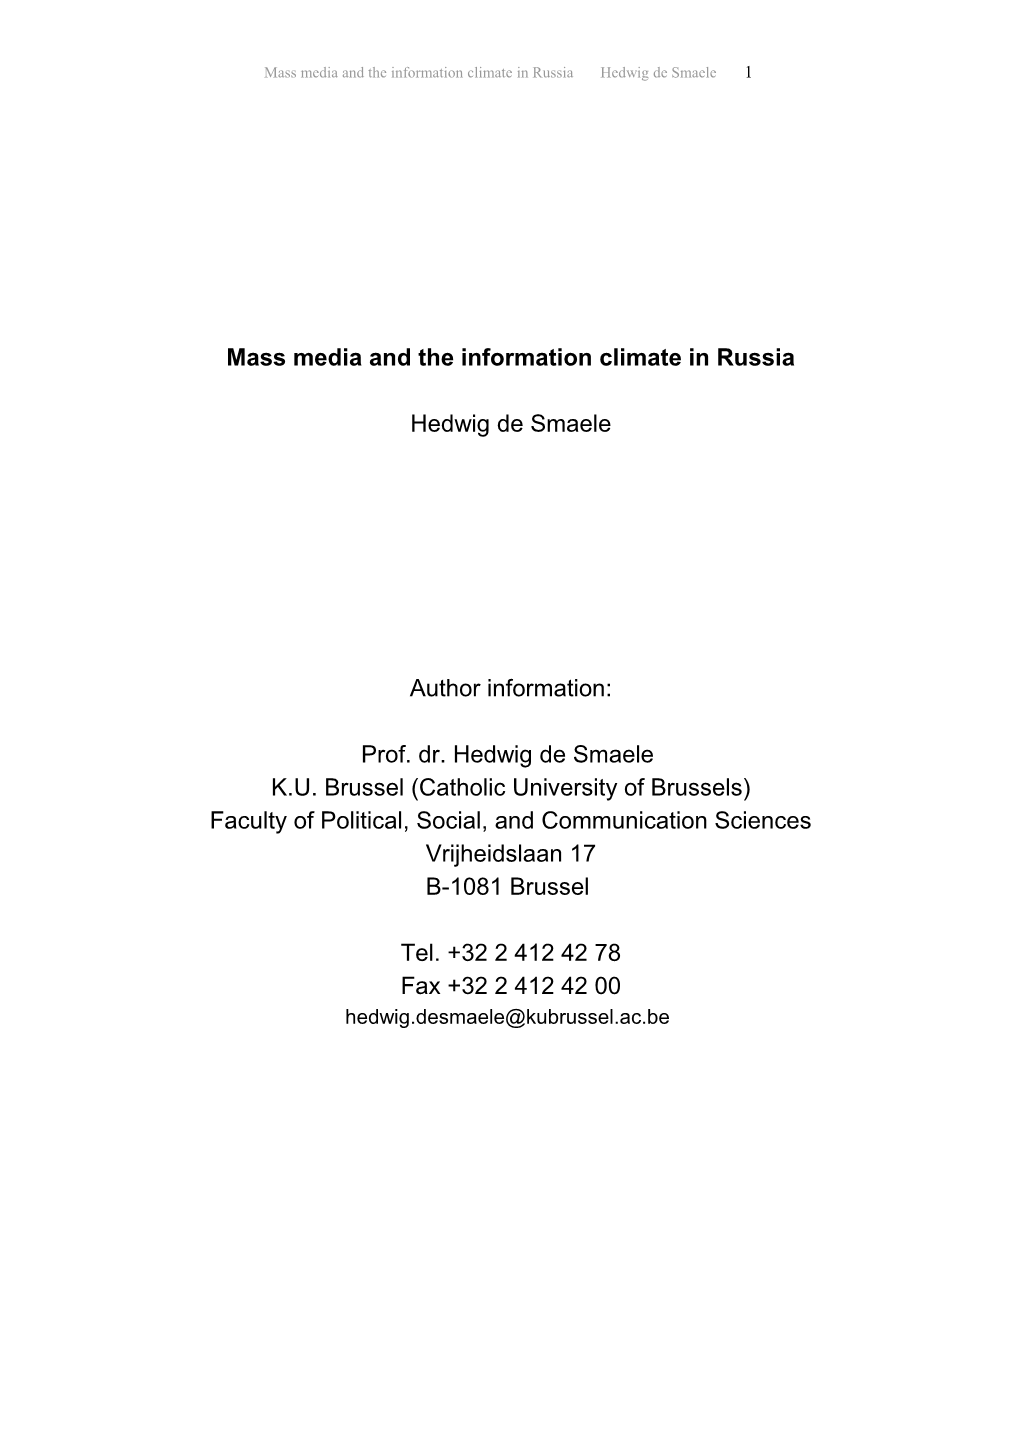 Information Culture in Russia